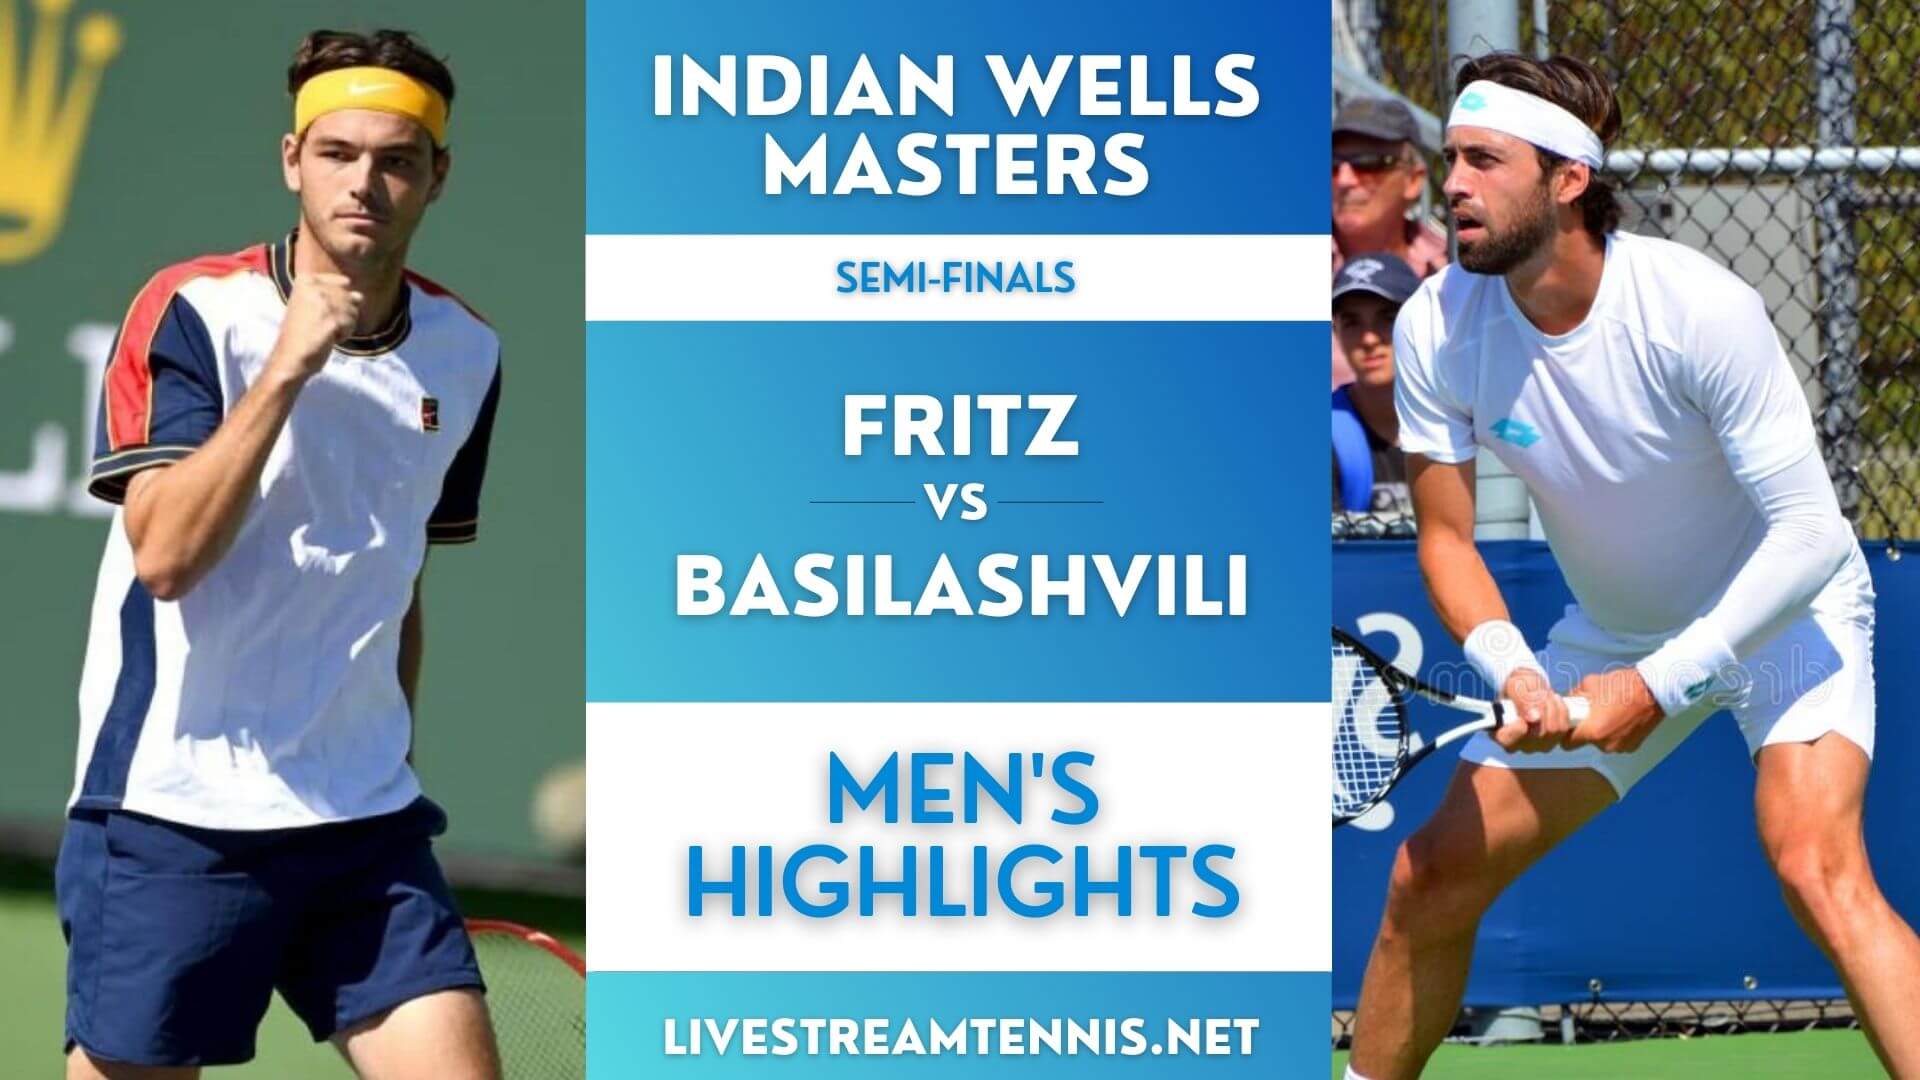 Indian Wells Masters Men Semi Final 1 Highlights 2021